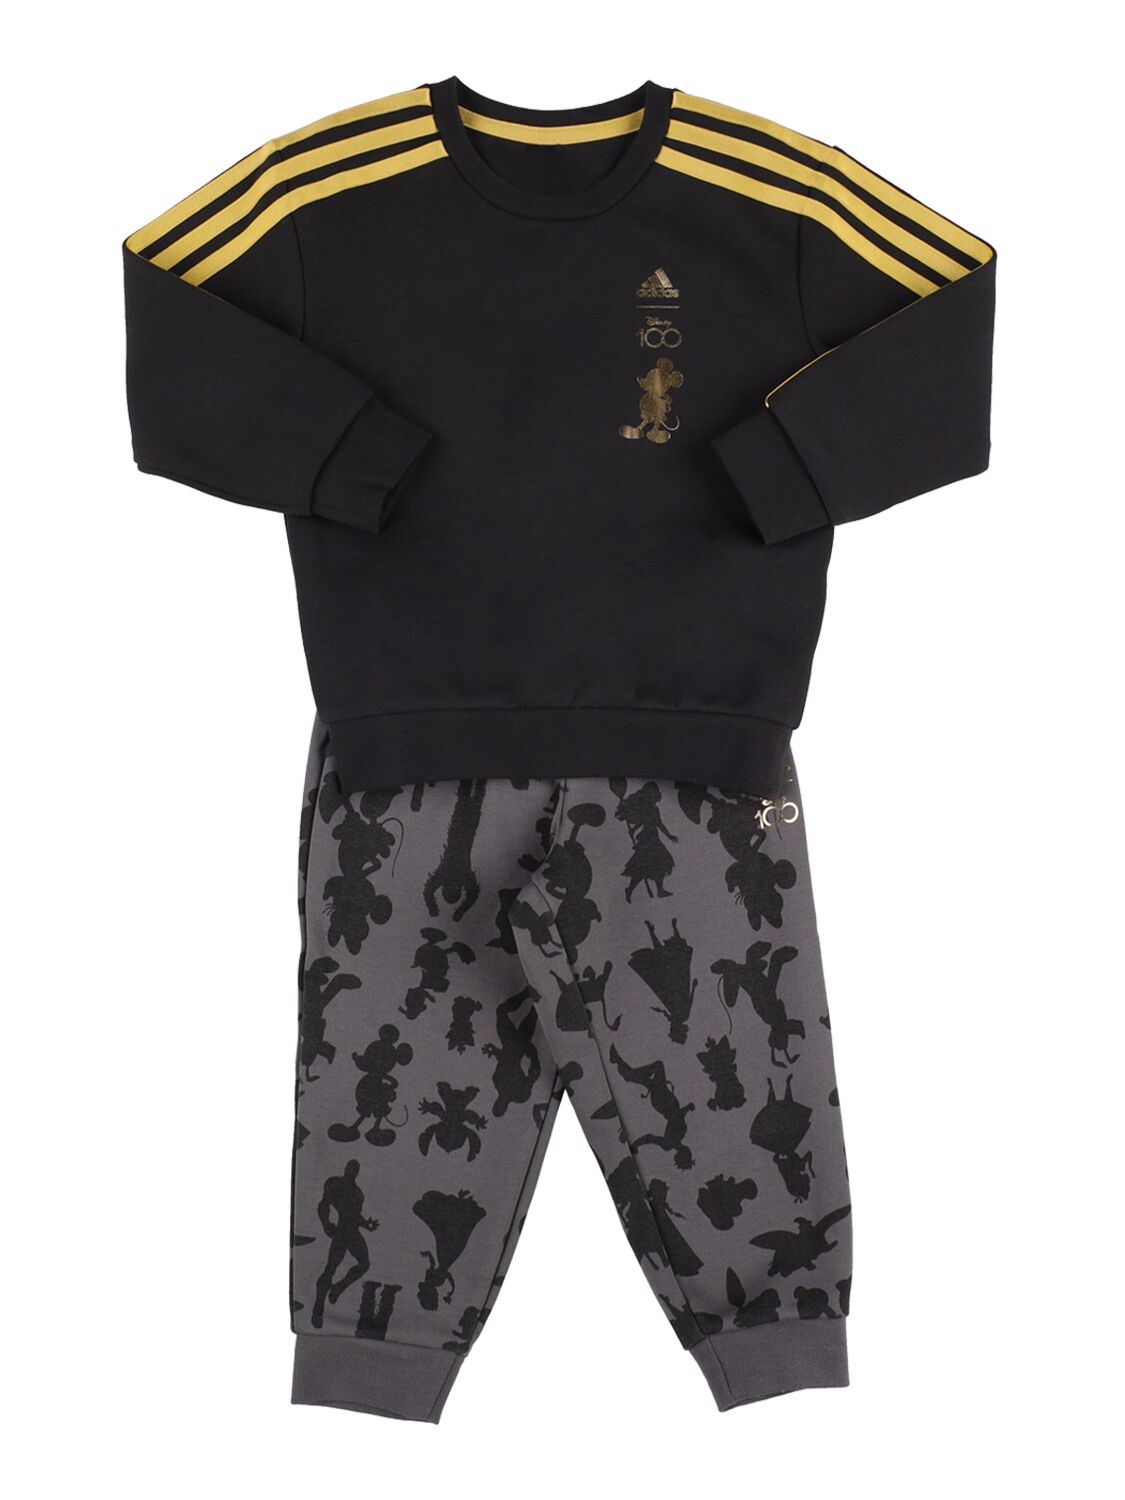 Adidas Originals Kids' Disney Cotton Blend Sweatshirt & Pants In Black,gold  | ModeSens